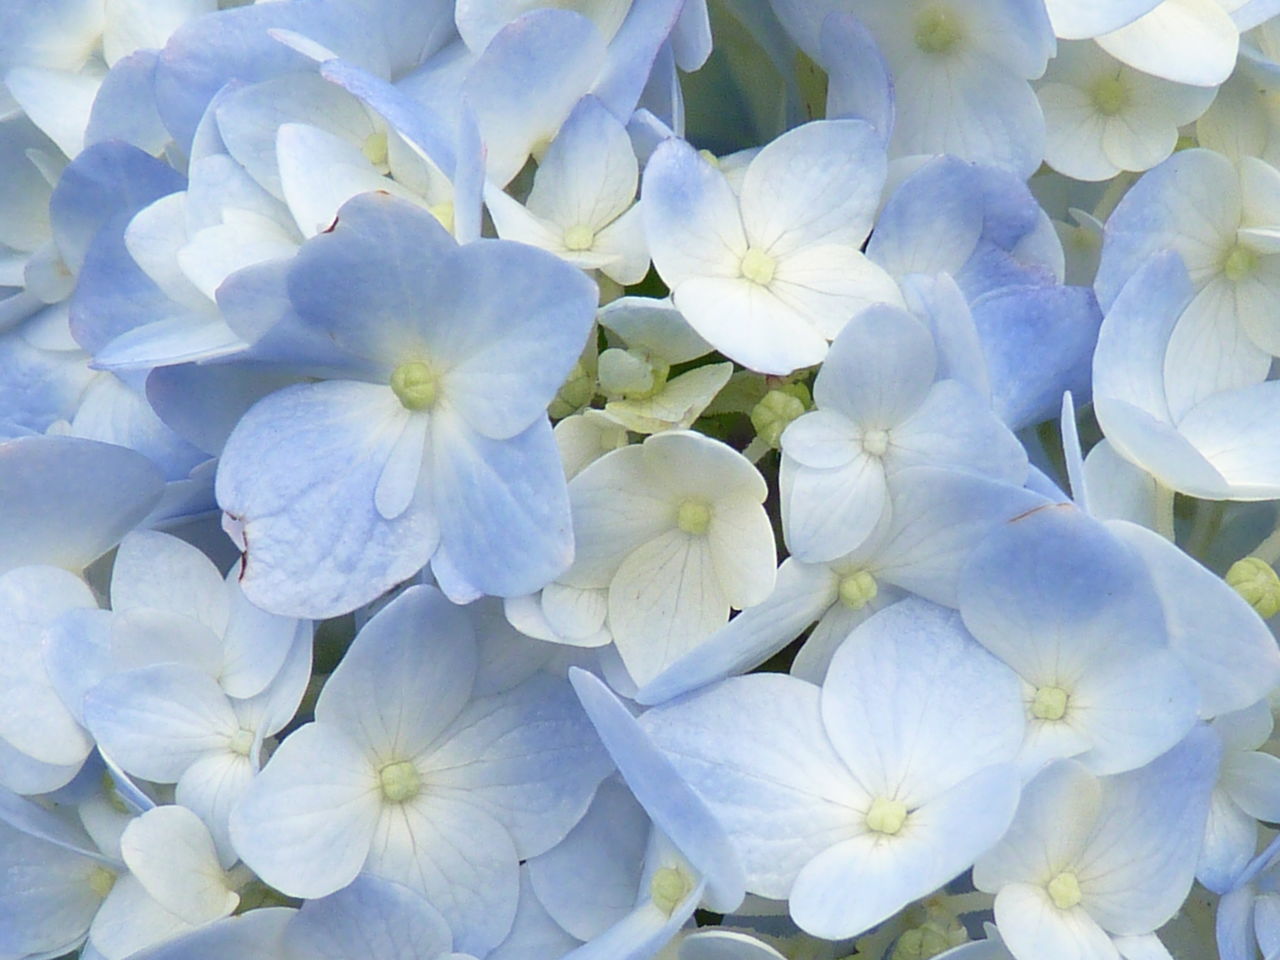 CLOSE-UP OF BLUE HYDRANGEA FLOWERS